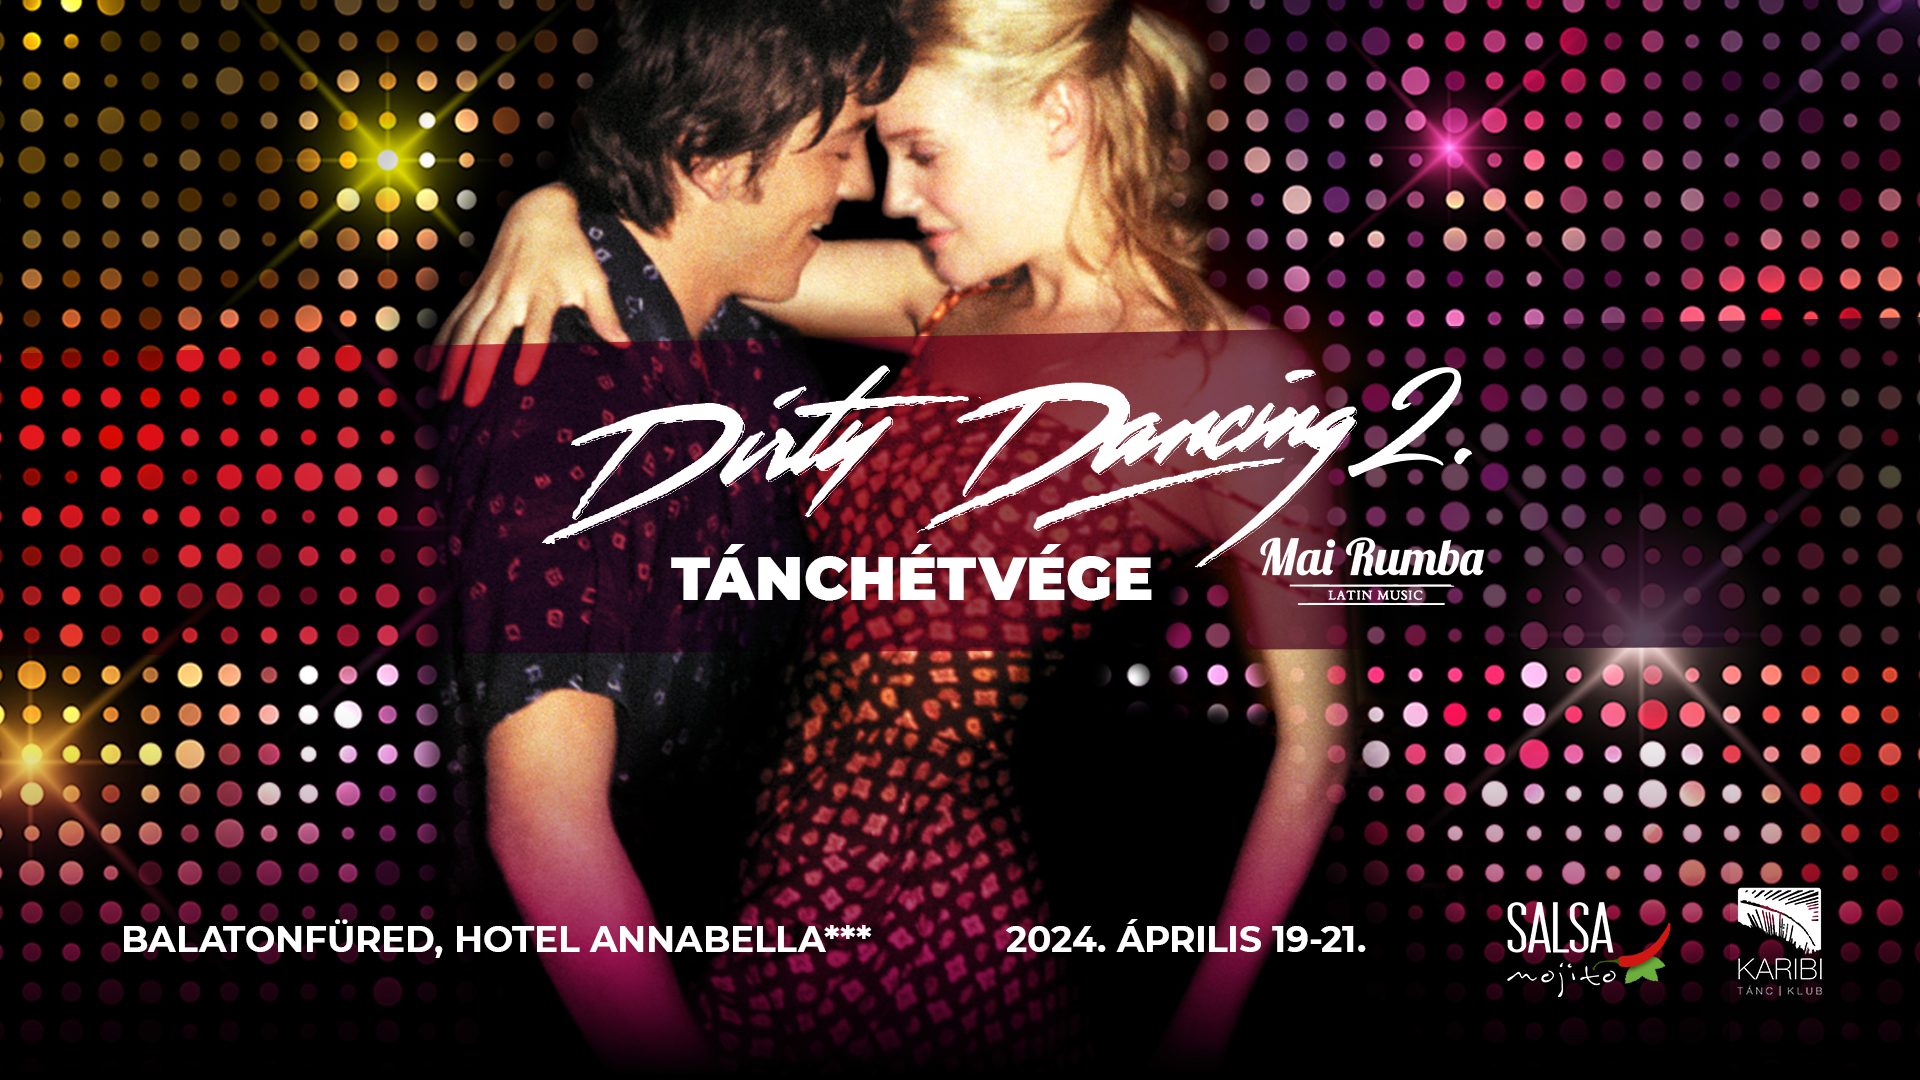 Dirty Dancing 2 Tánchétvége 2024 április Mai Rumba v2